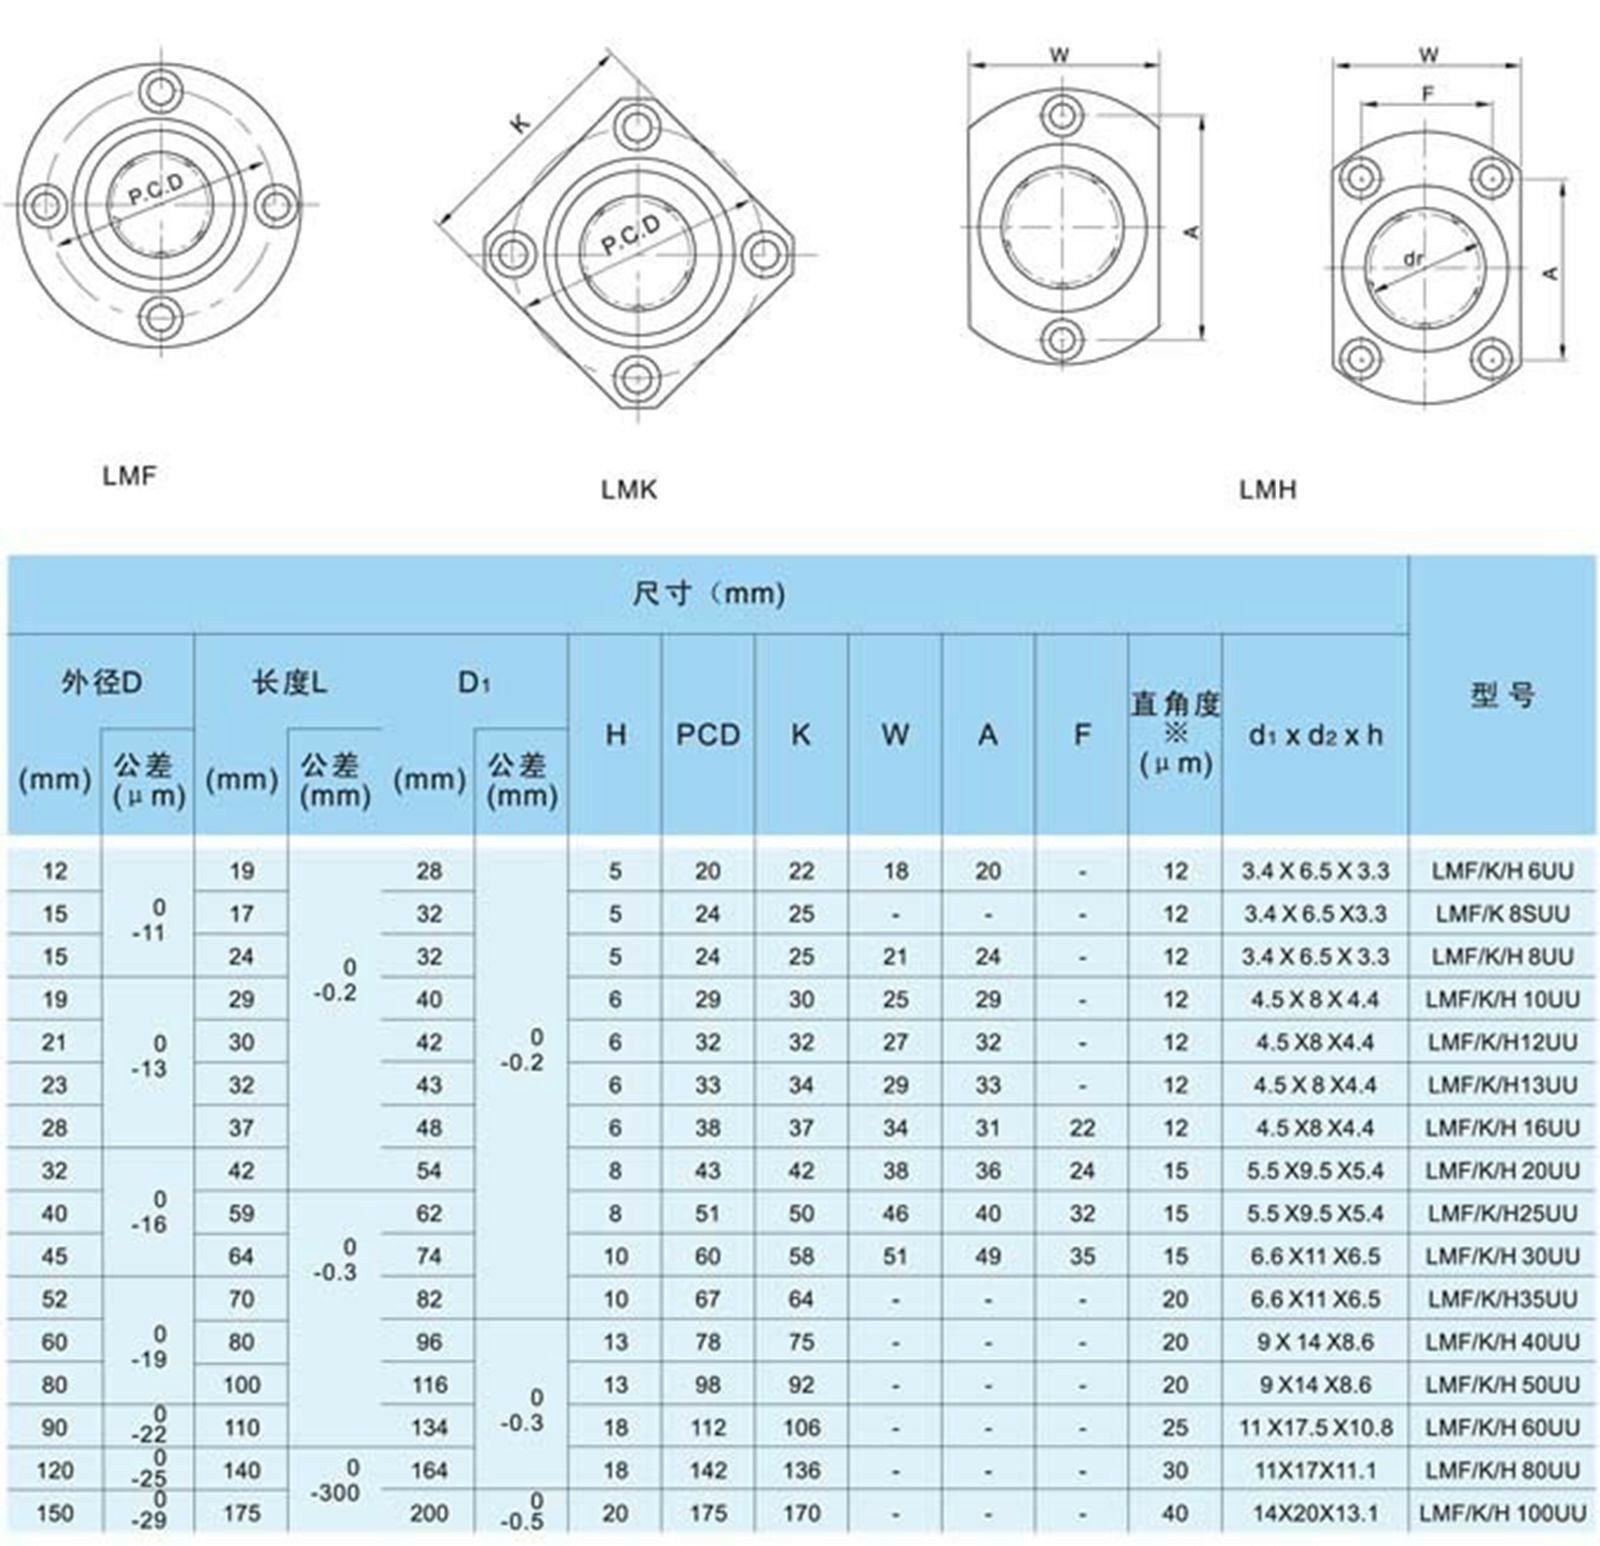 (2) LM 30LUU Round Long Type 30*45*123mm CNC Linear Motion Metal Shield Bearing